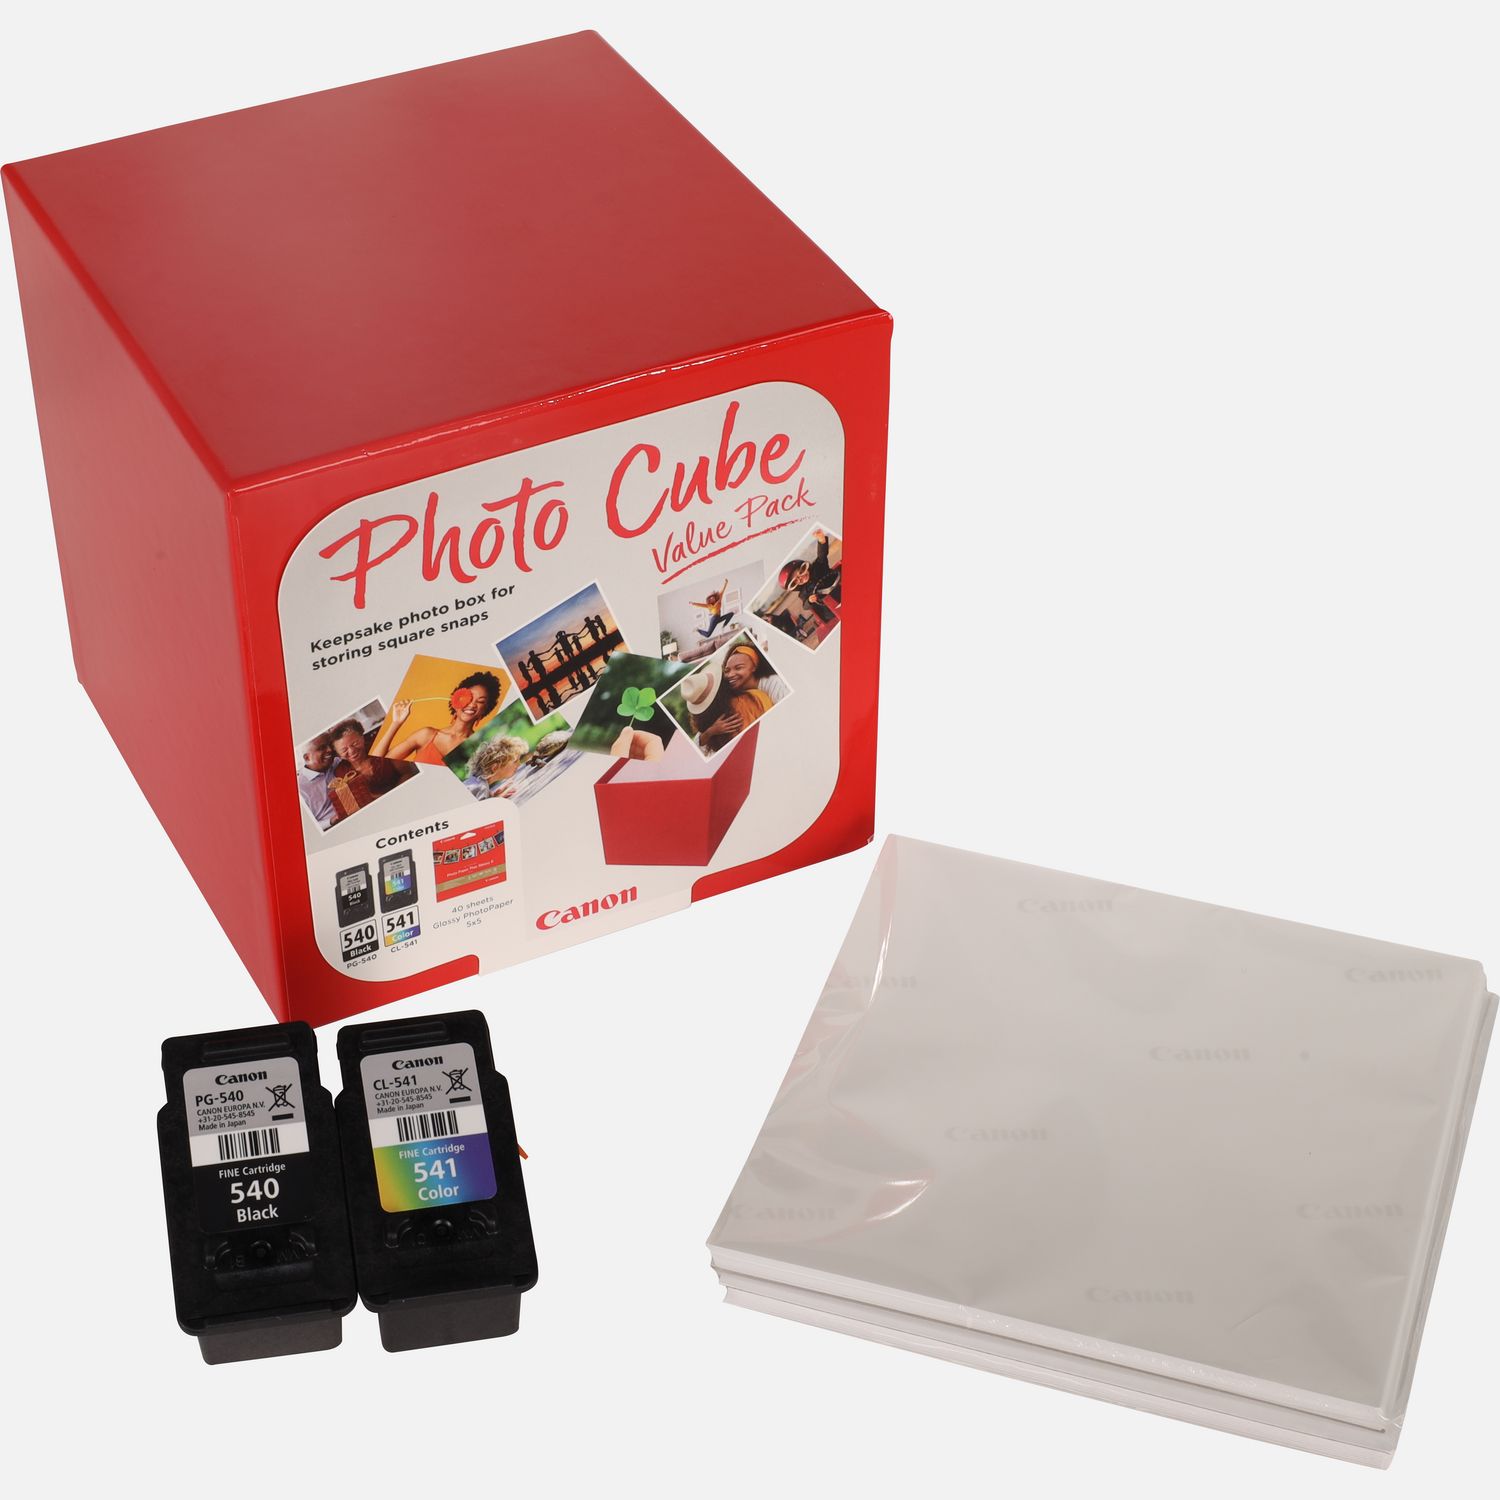 Canon PG-540 Black Cartridge (Carton Packaging)